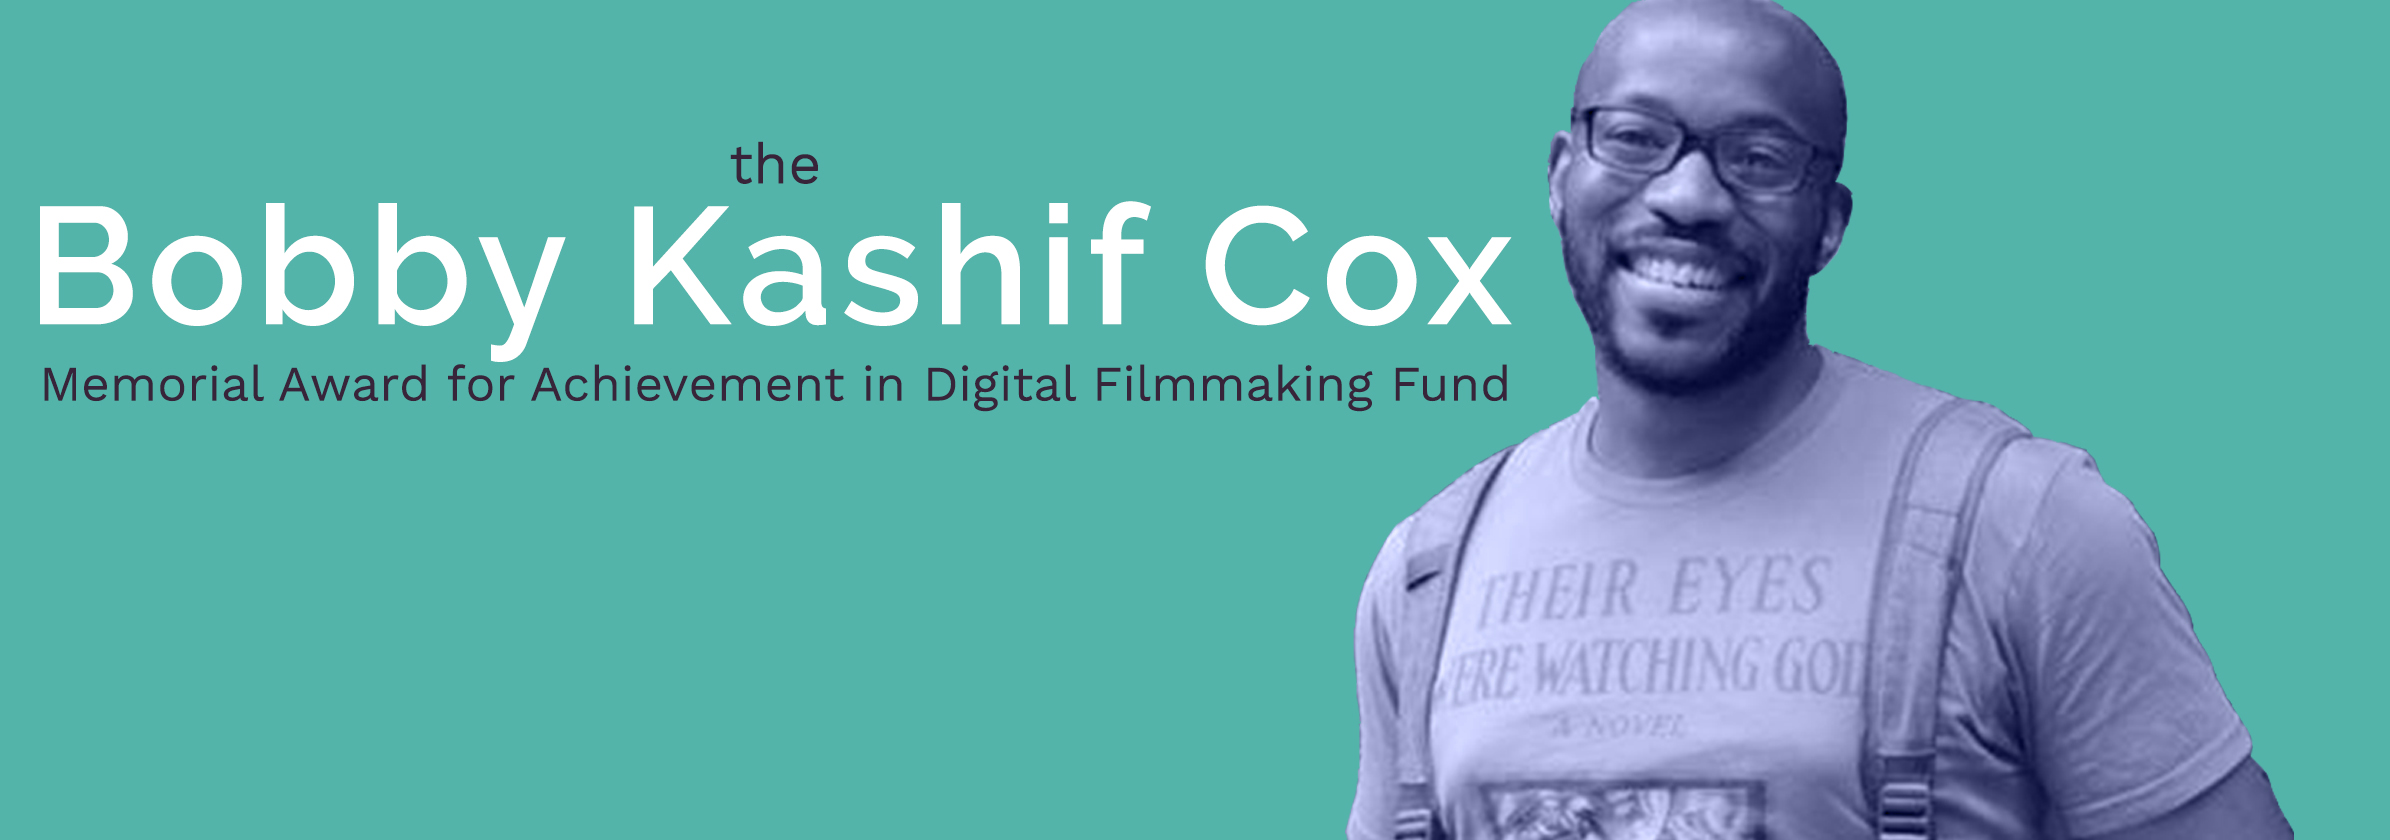 Bobby Kashif Cox memorial filmmaking award at Hook arts Media 